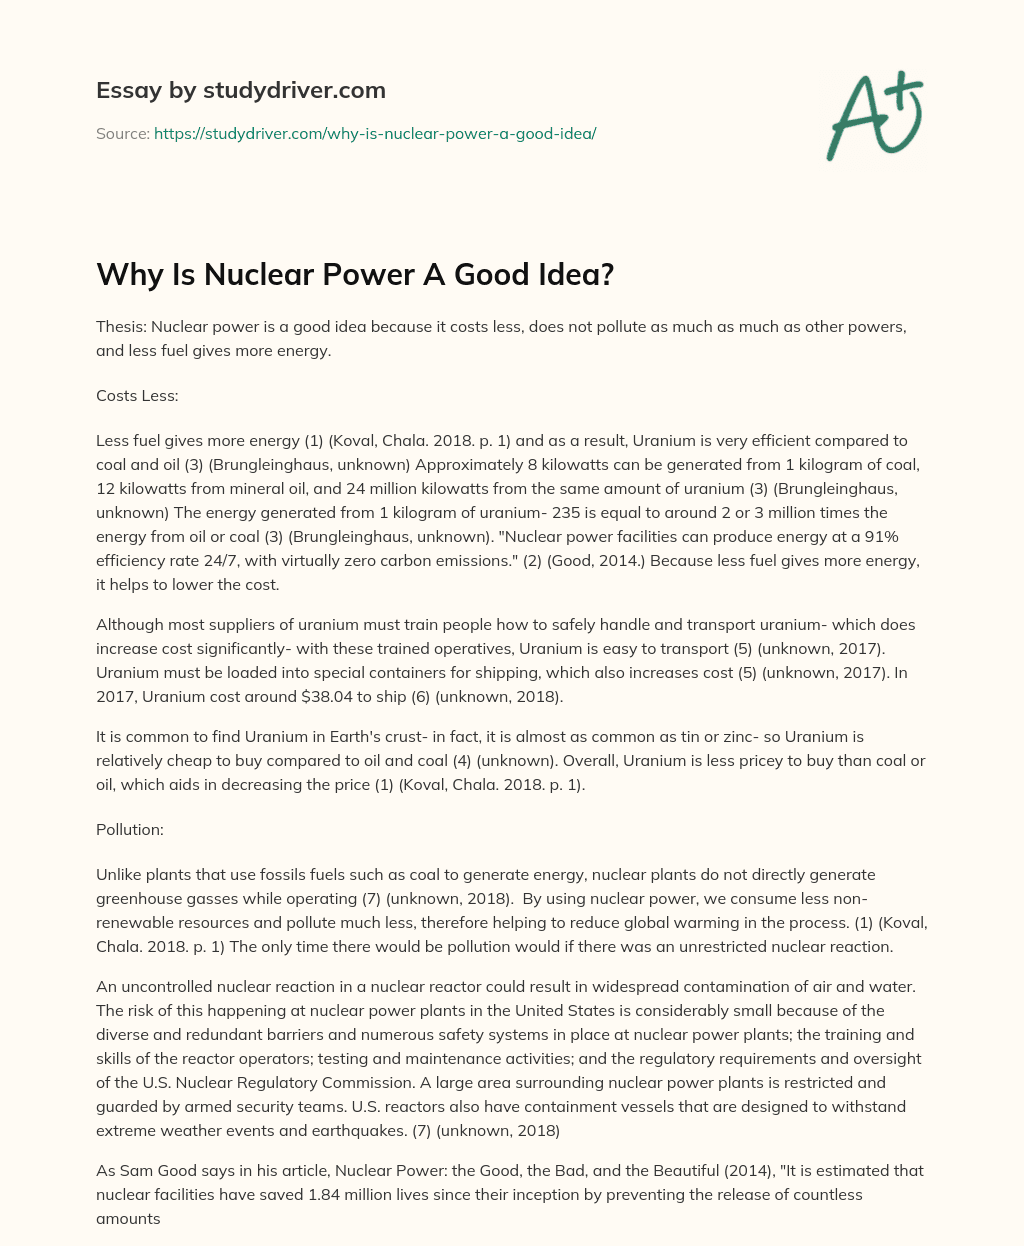 Why is Nuclear Power a Good Idea? essay